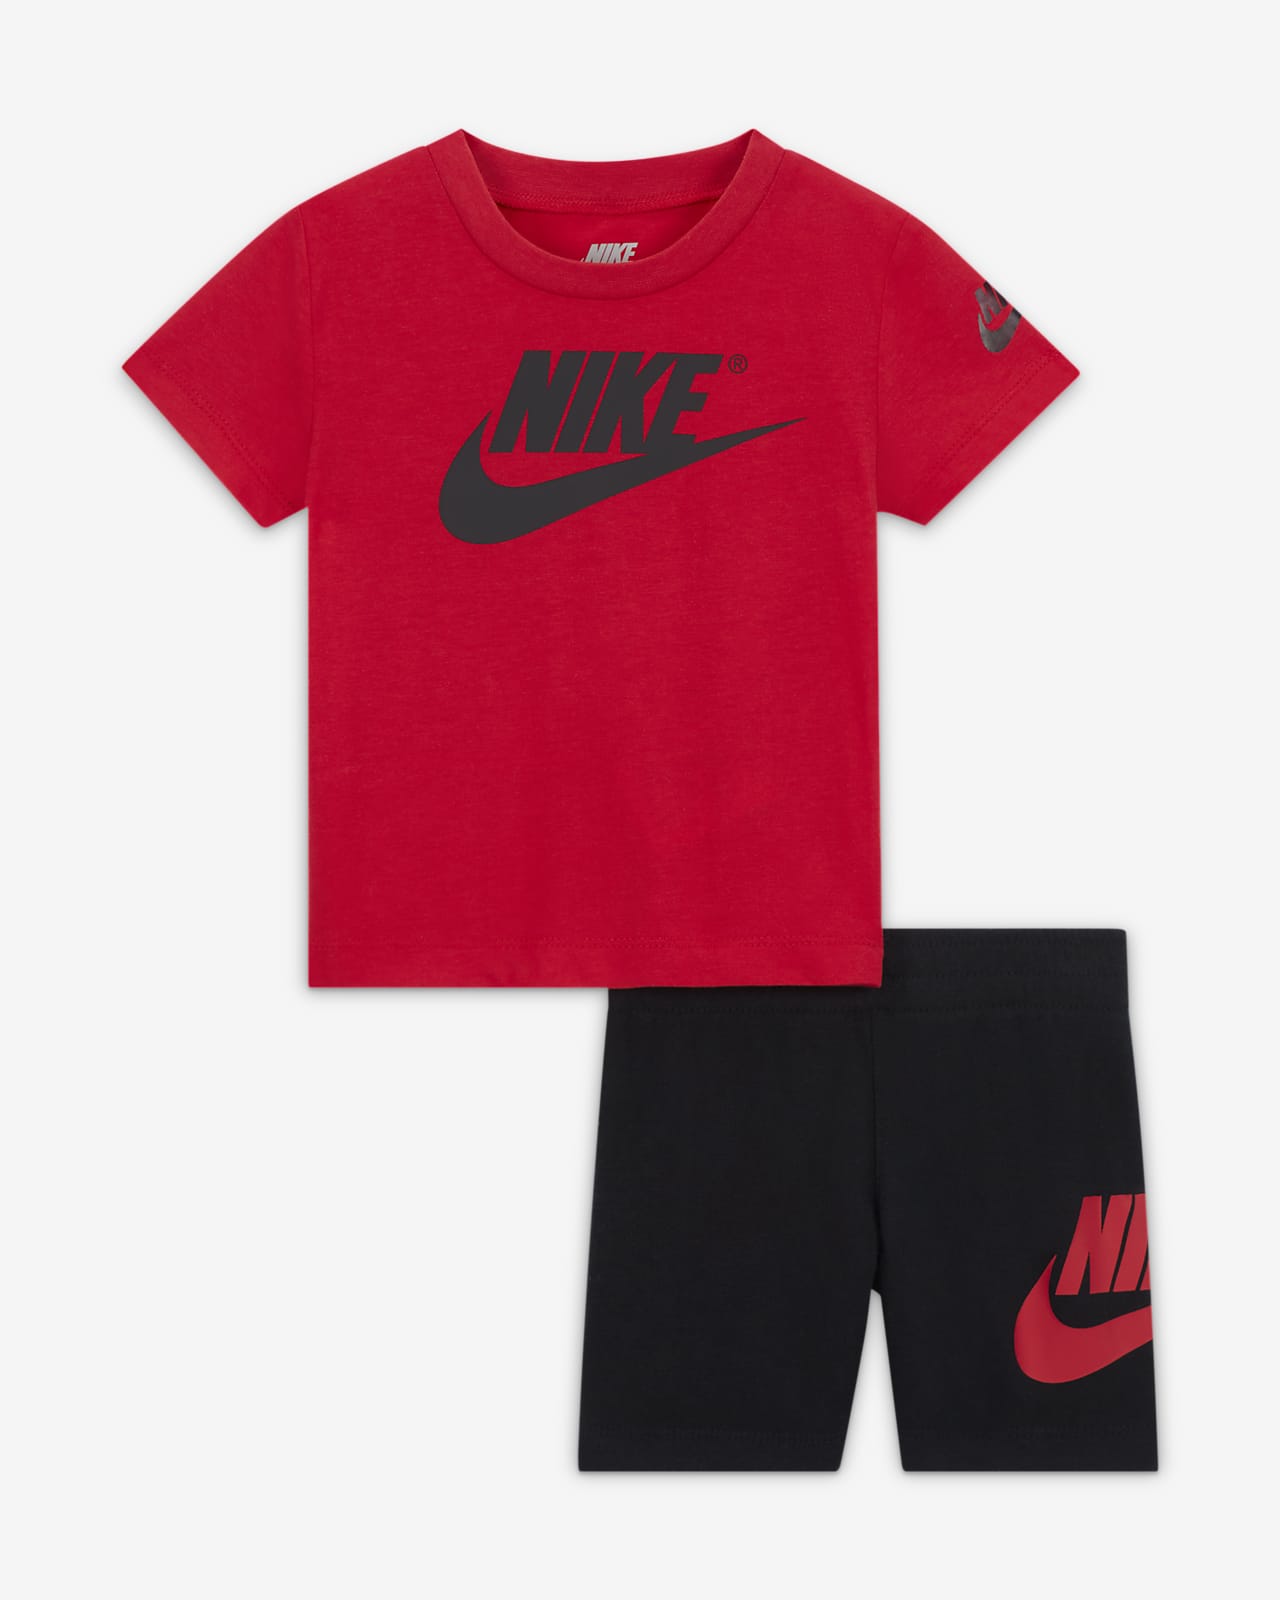 Nike Baby (12–24M) T-Shirt and Shorts Set